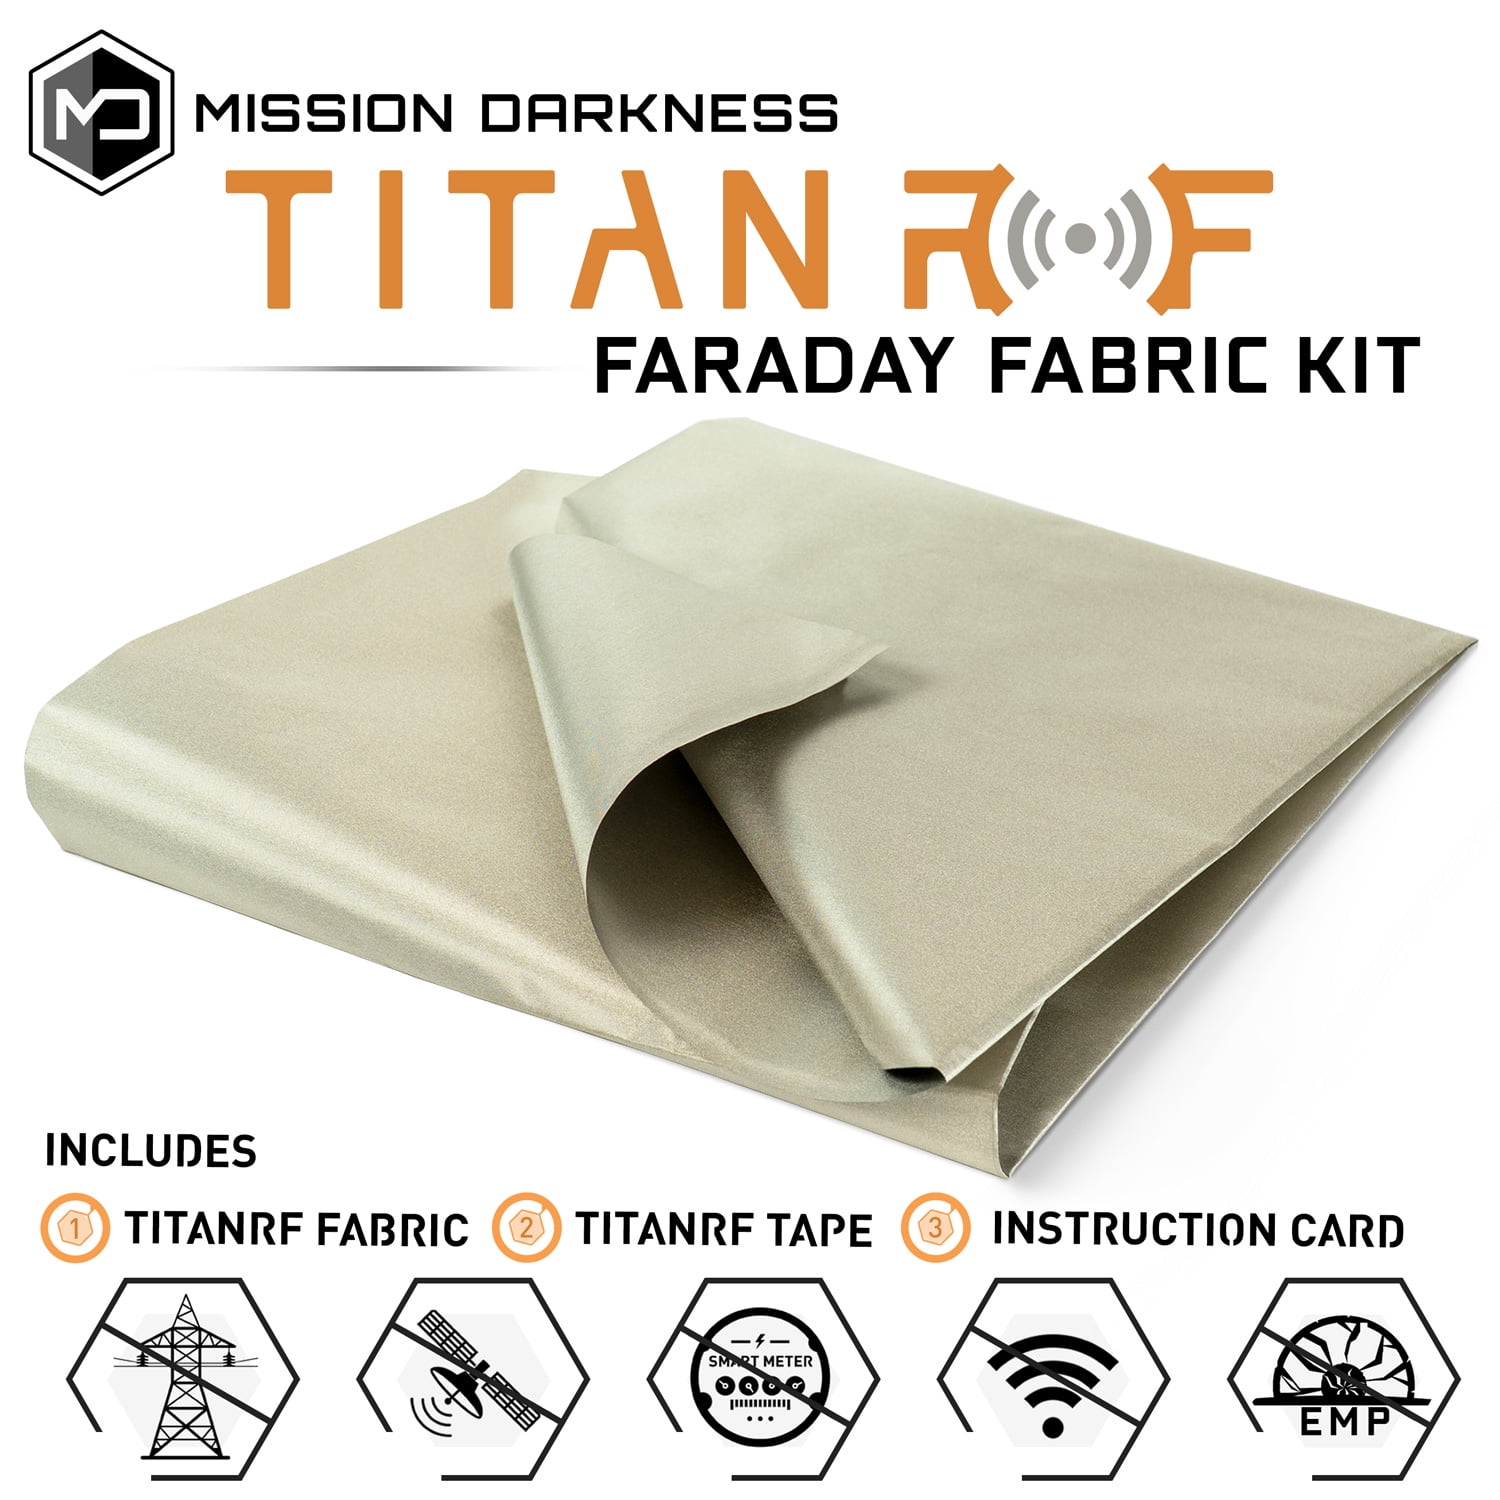 TitanRF Faraday Fabric Kit Includes 44W x 36L Fabric + 36L Tape + Usage  Instructions. Military Grade Conductive Material Shields RF Signals (WiFi